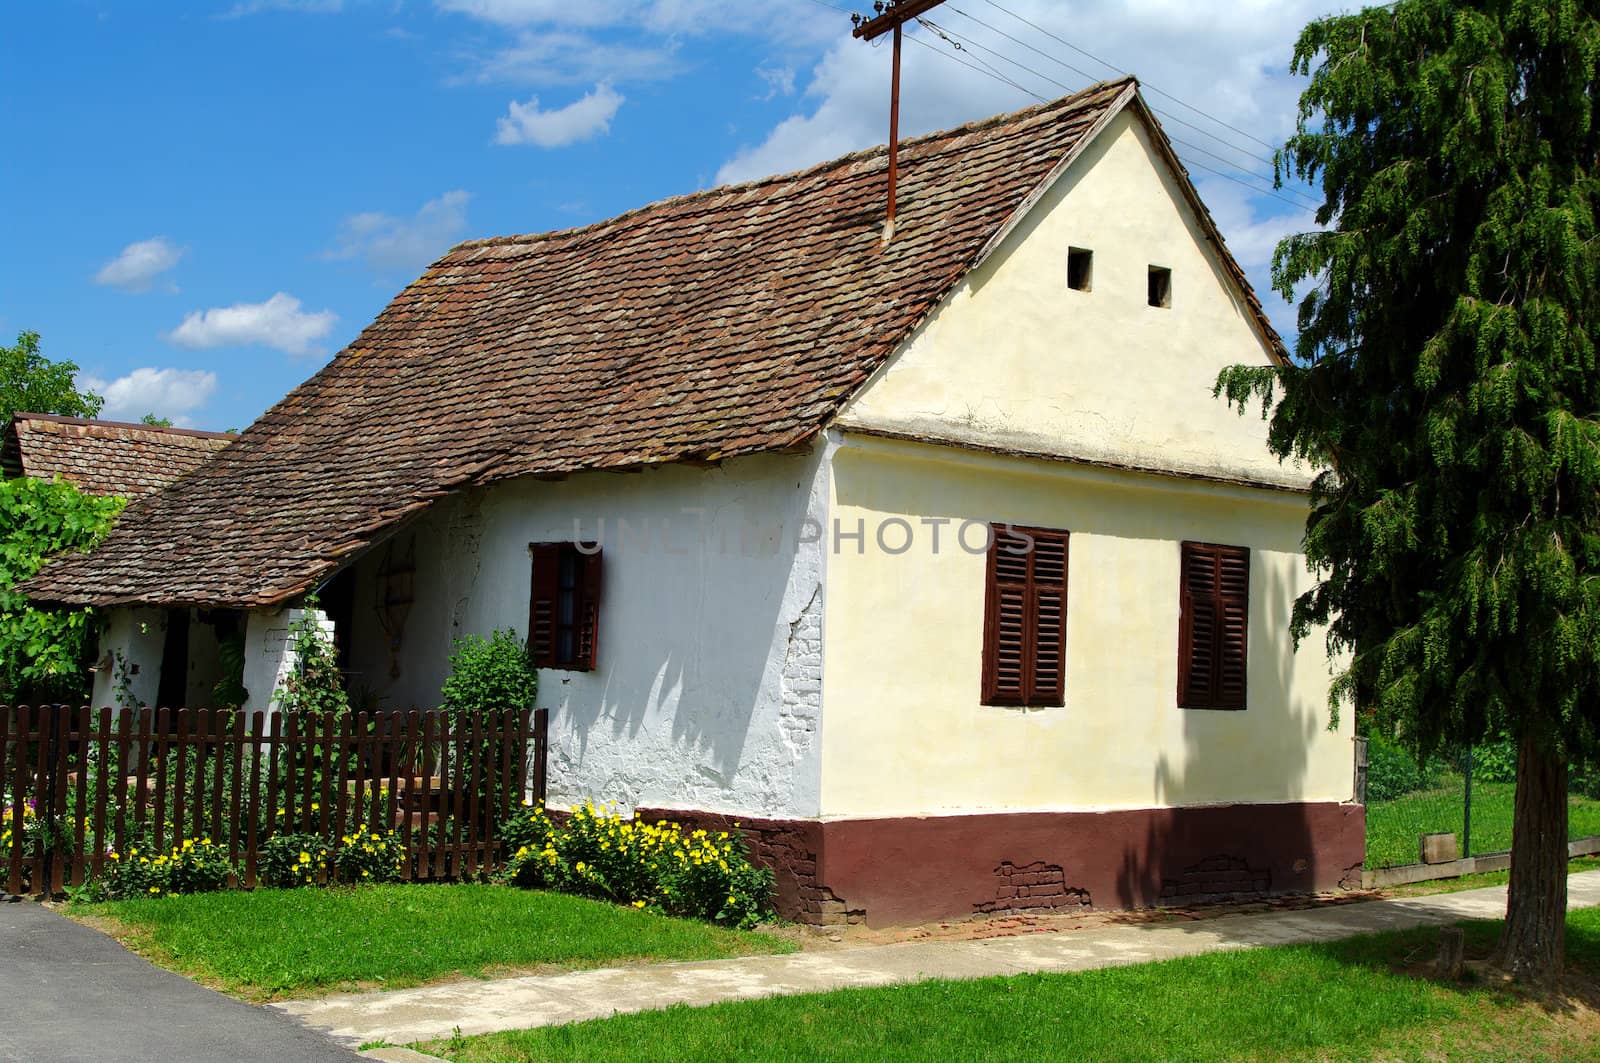 Very old slavonian rural house - Croatia